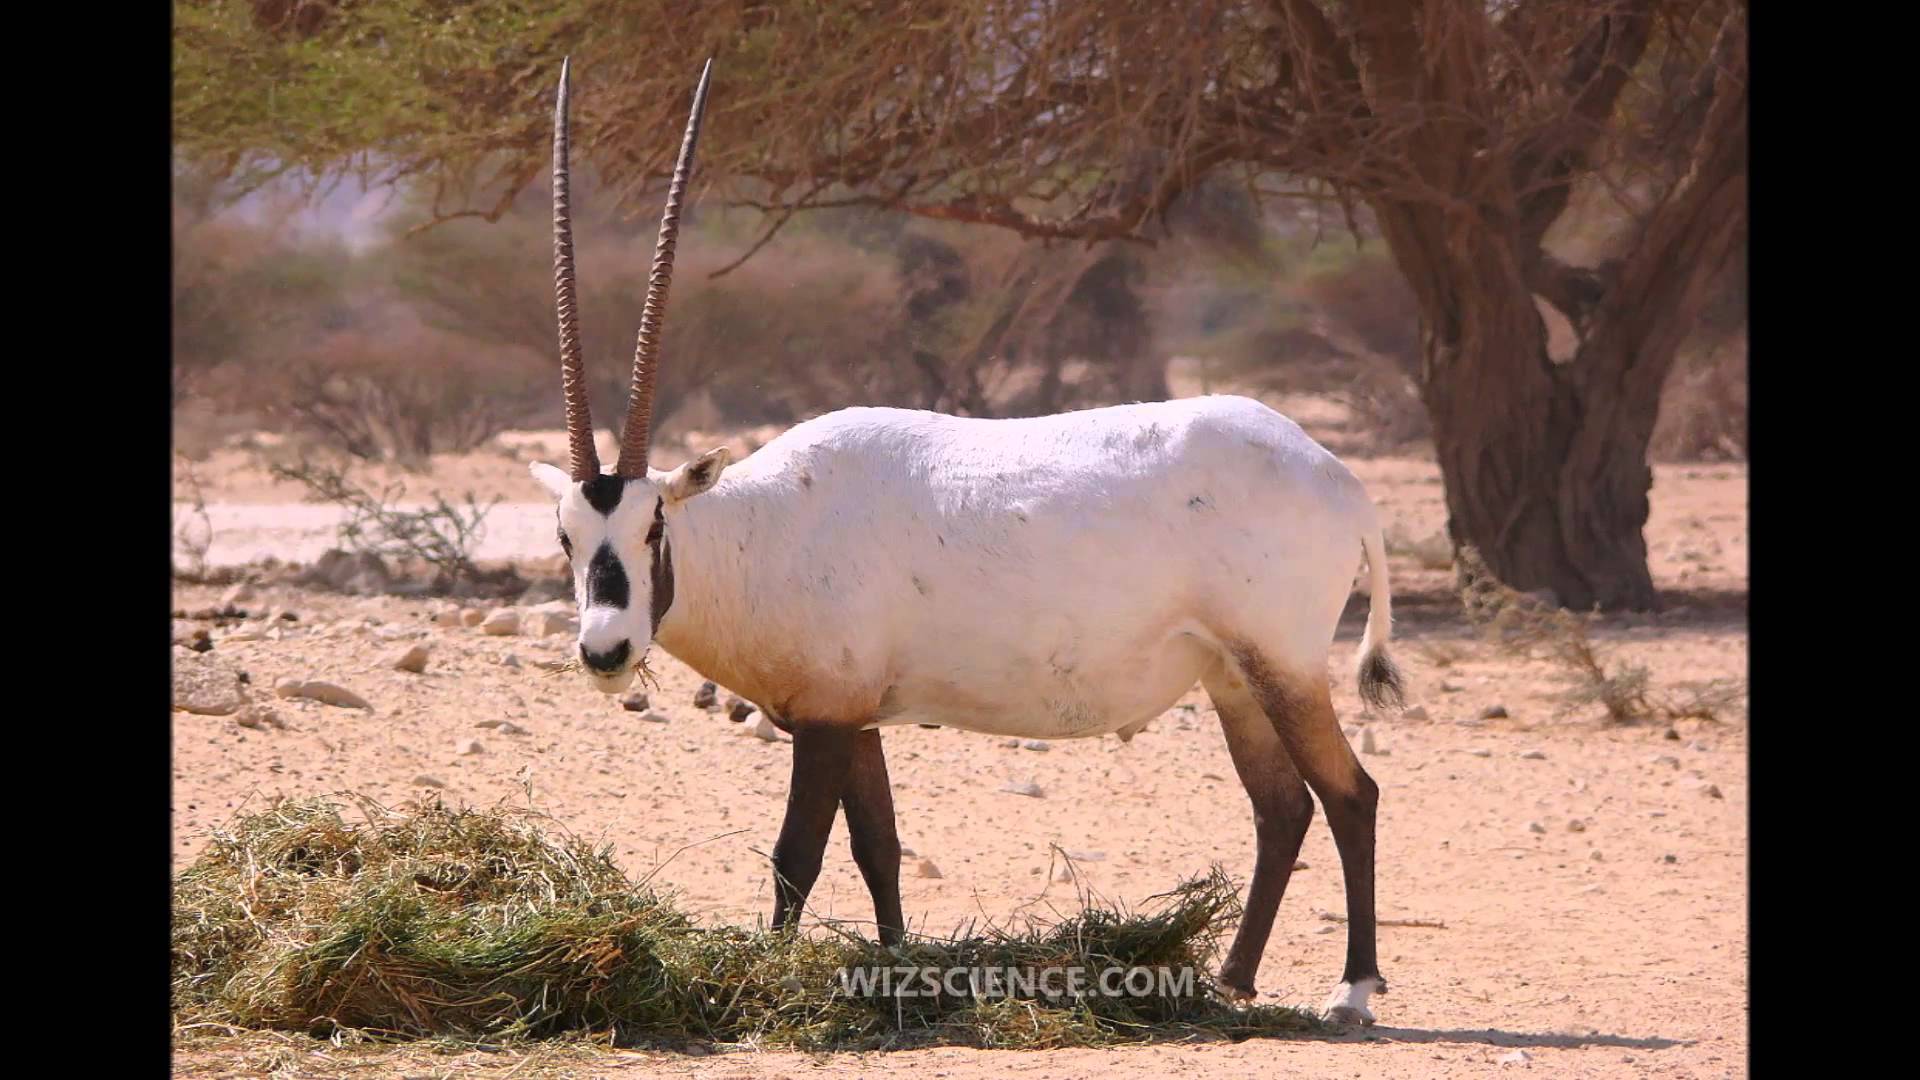 Arabian oryx reintroduction - Video Learning - WizScience.com - YouTube